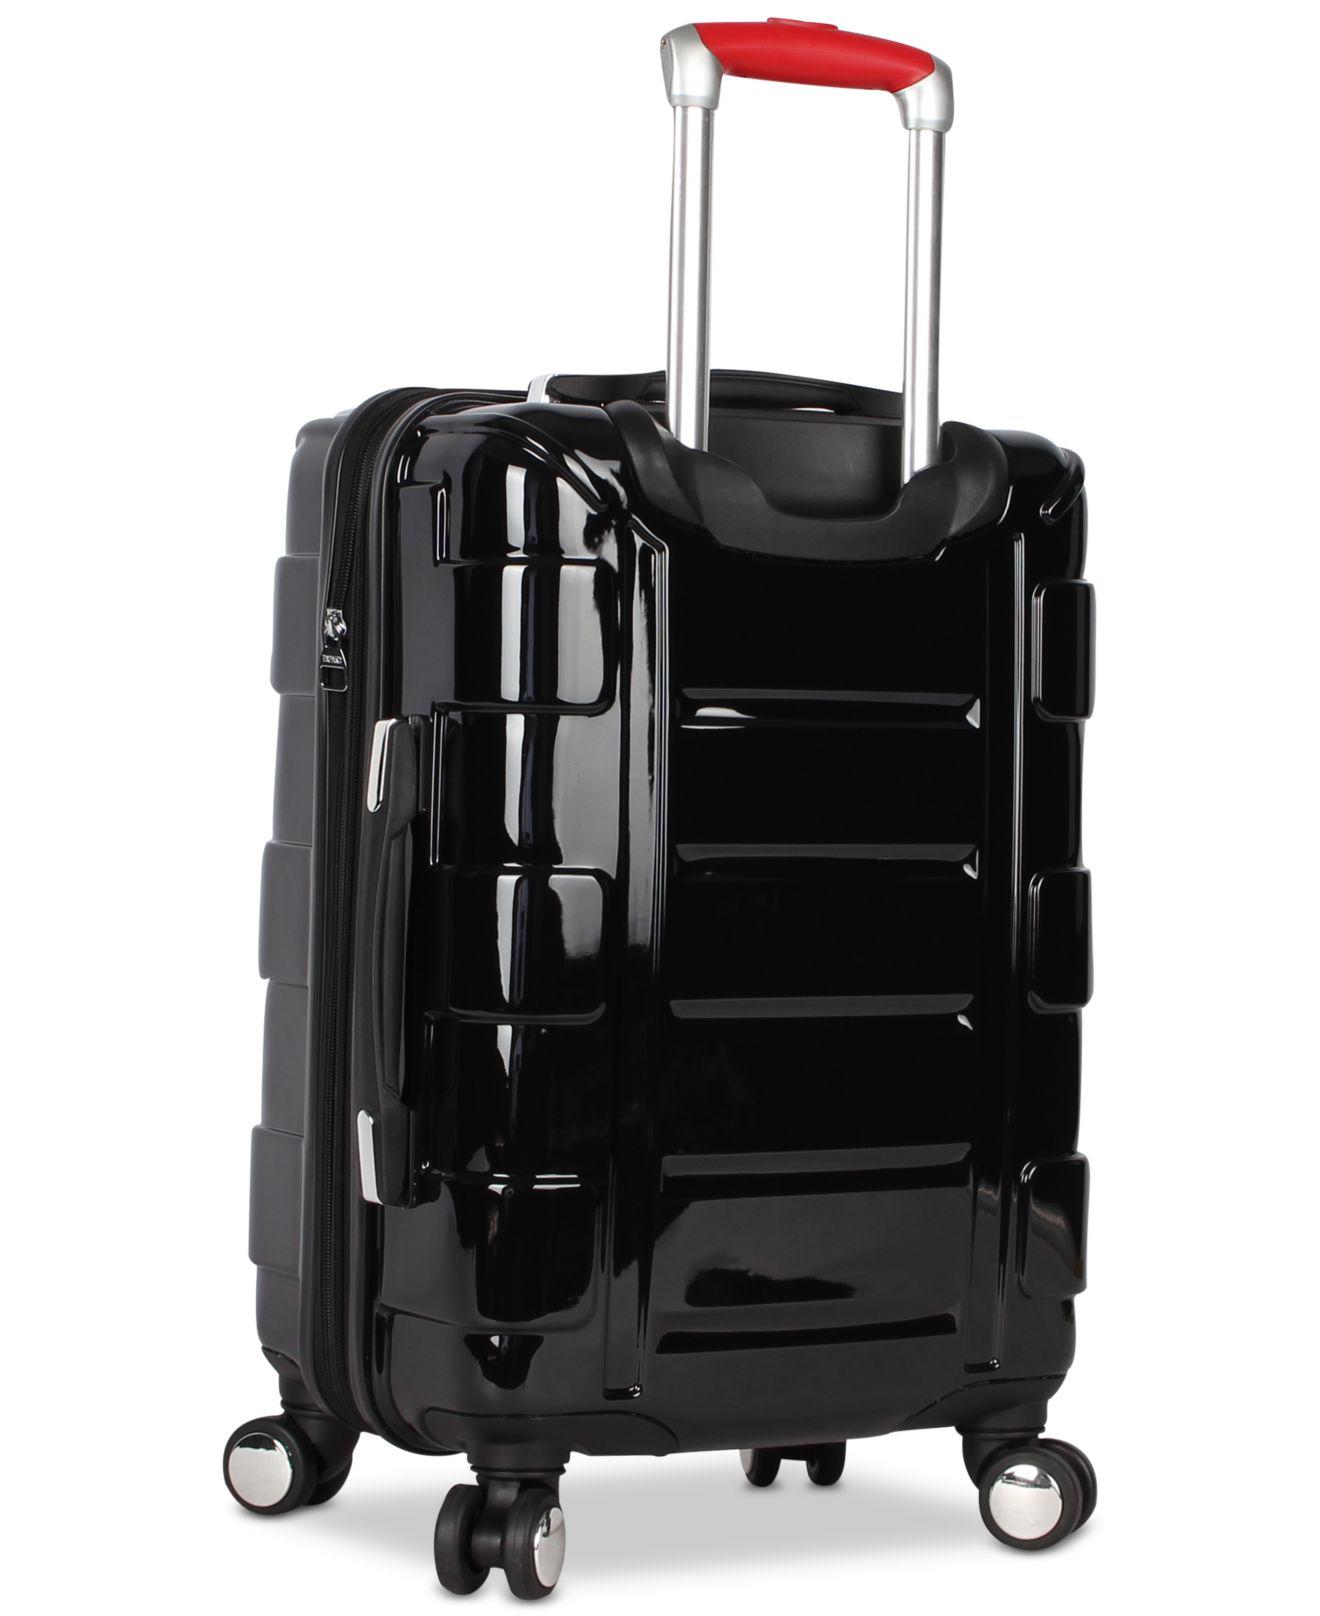 Steve Madden Black 4-Piece Luggage Set